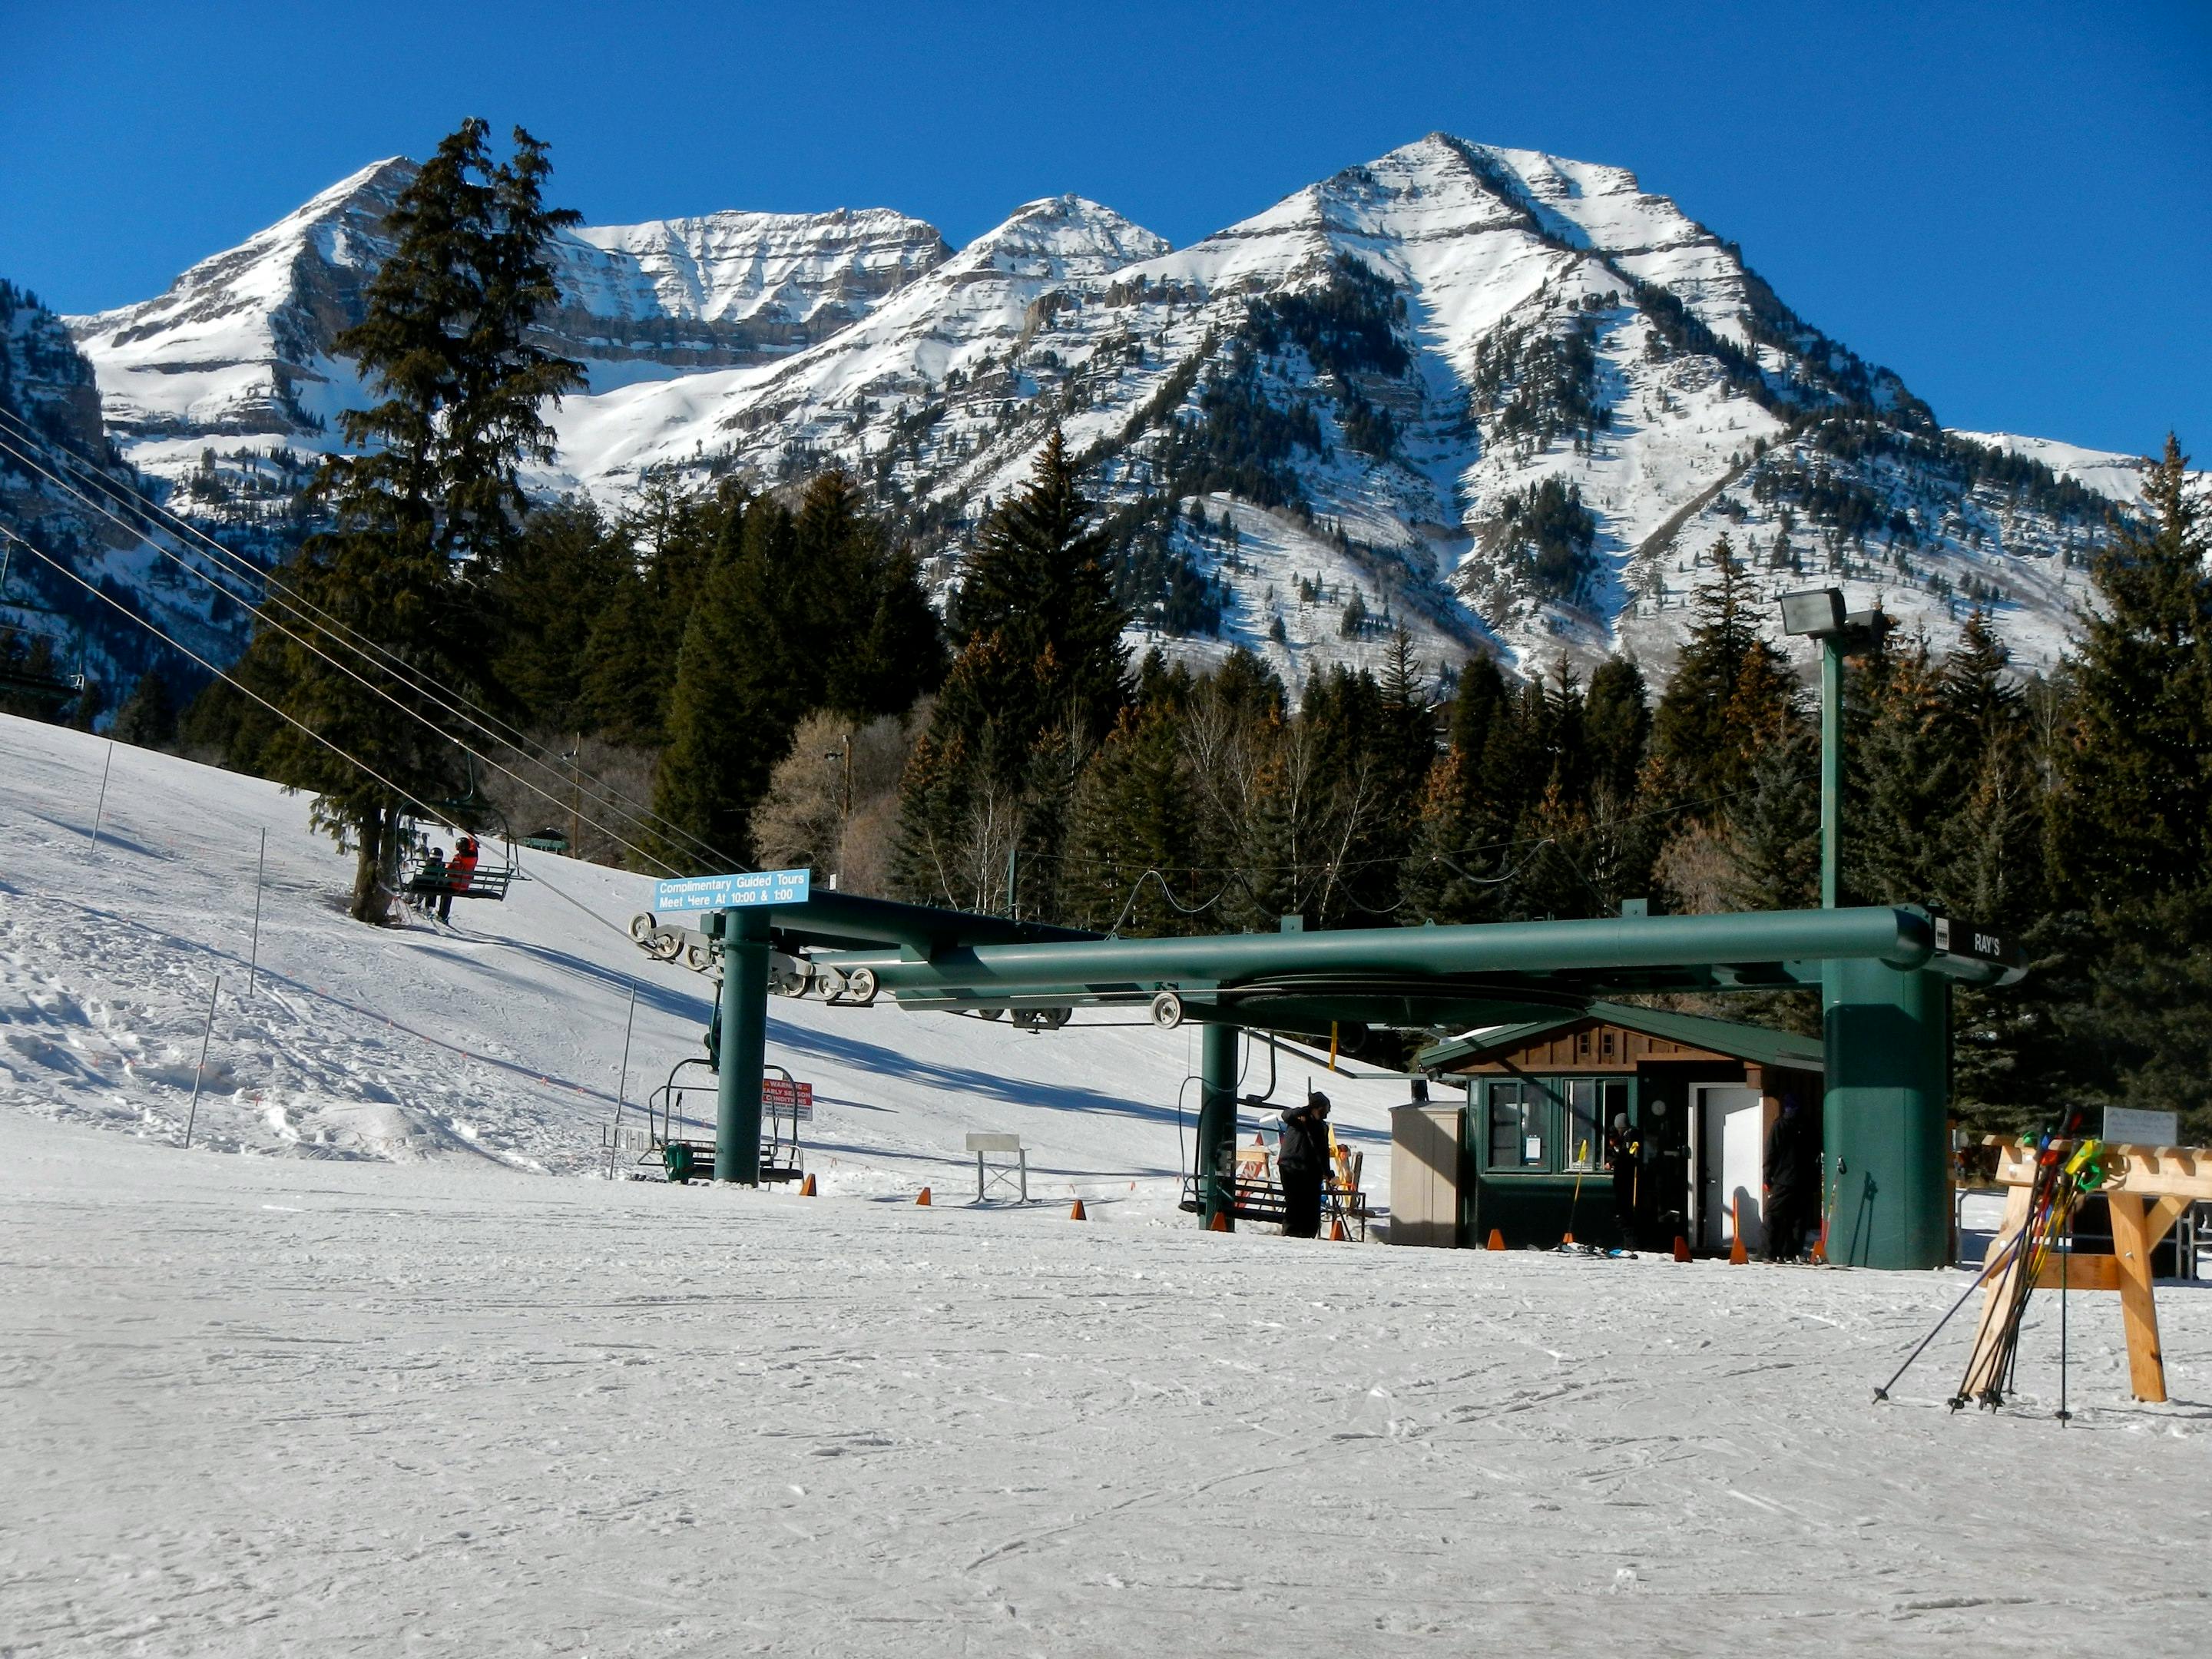 A chairlift at Sundance Ski Resort. 